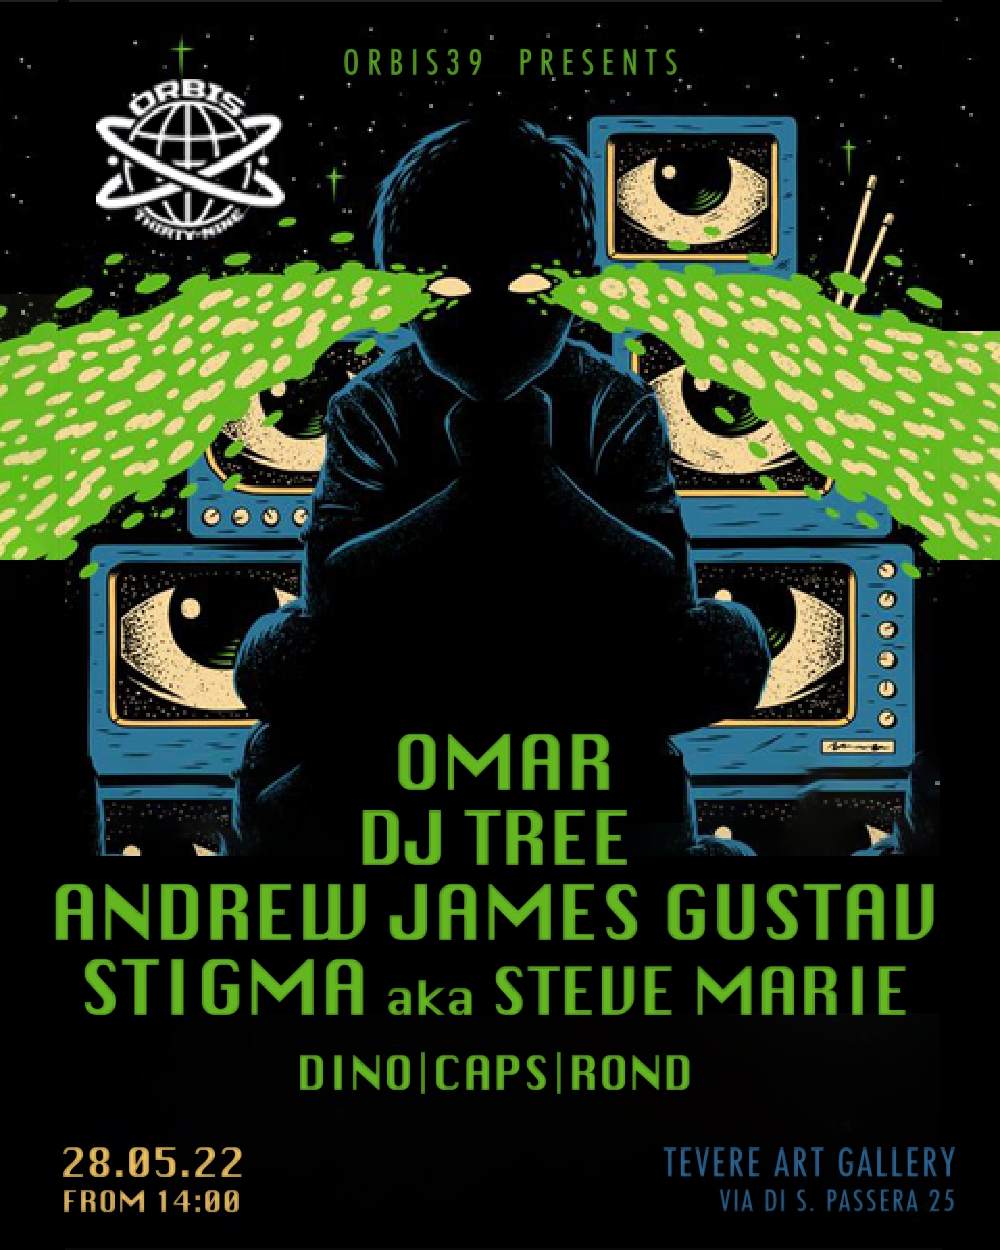 ORBIS39 in ROME with OMAR, GUSTAV, DJ TREE & STIGMA  - フライヤー表